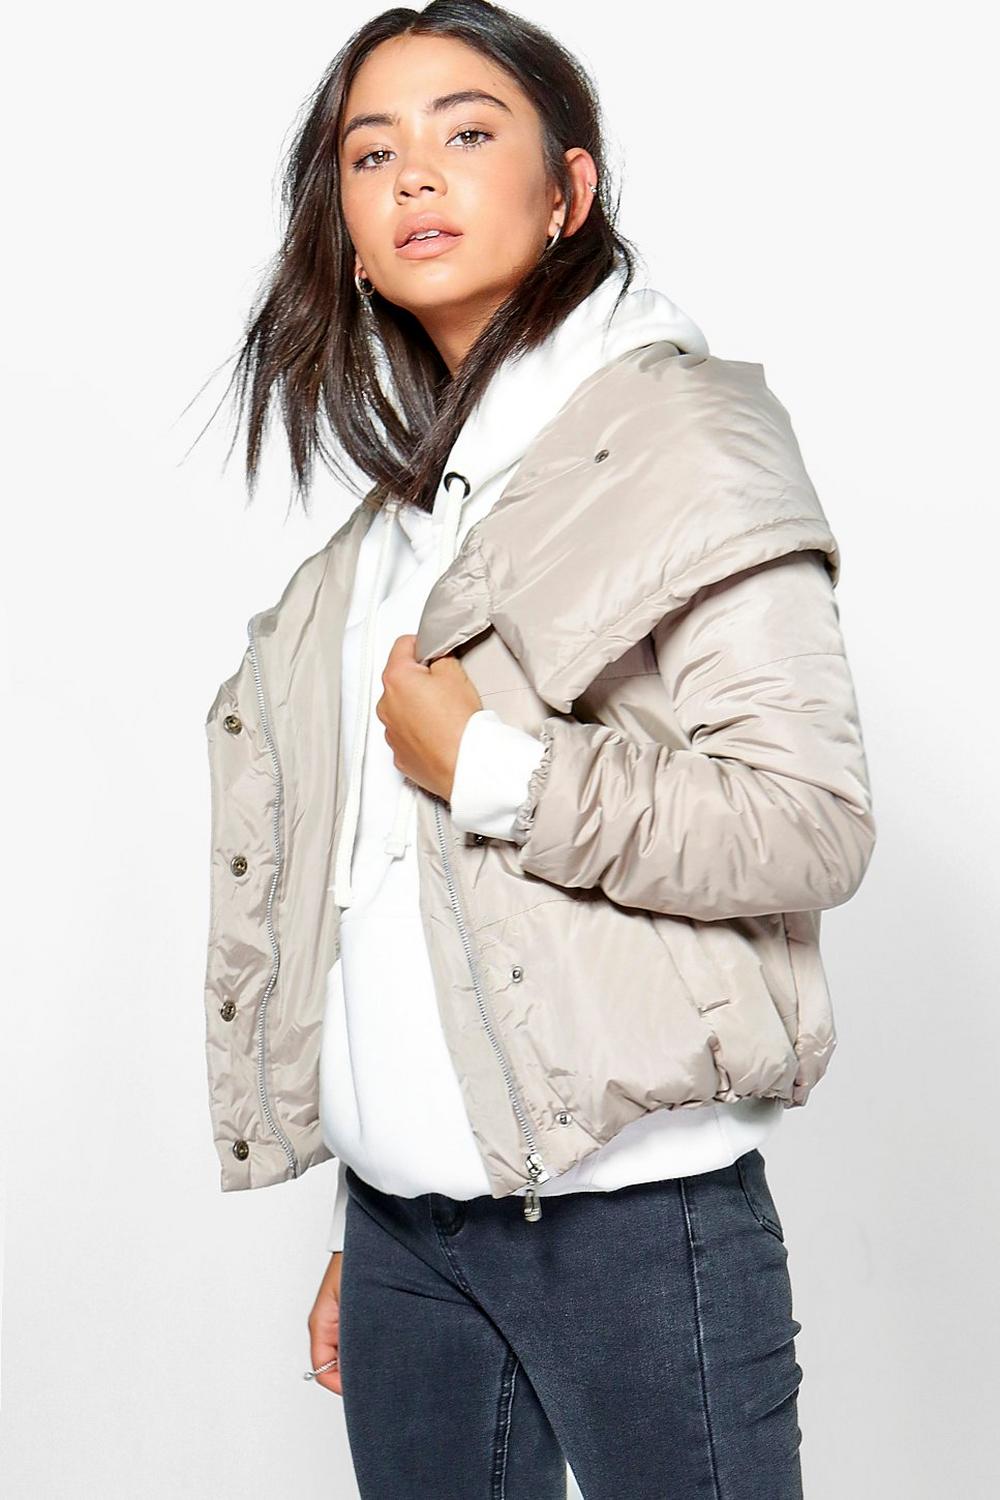 Boohoo Womens Florence Crop Padded Jacket | eBay